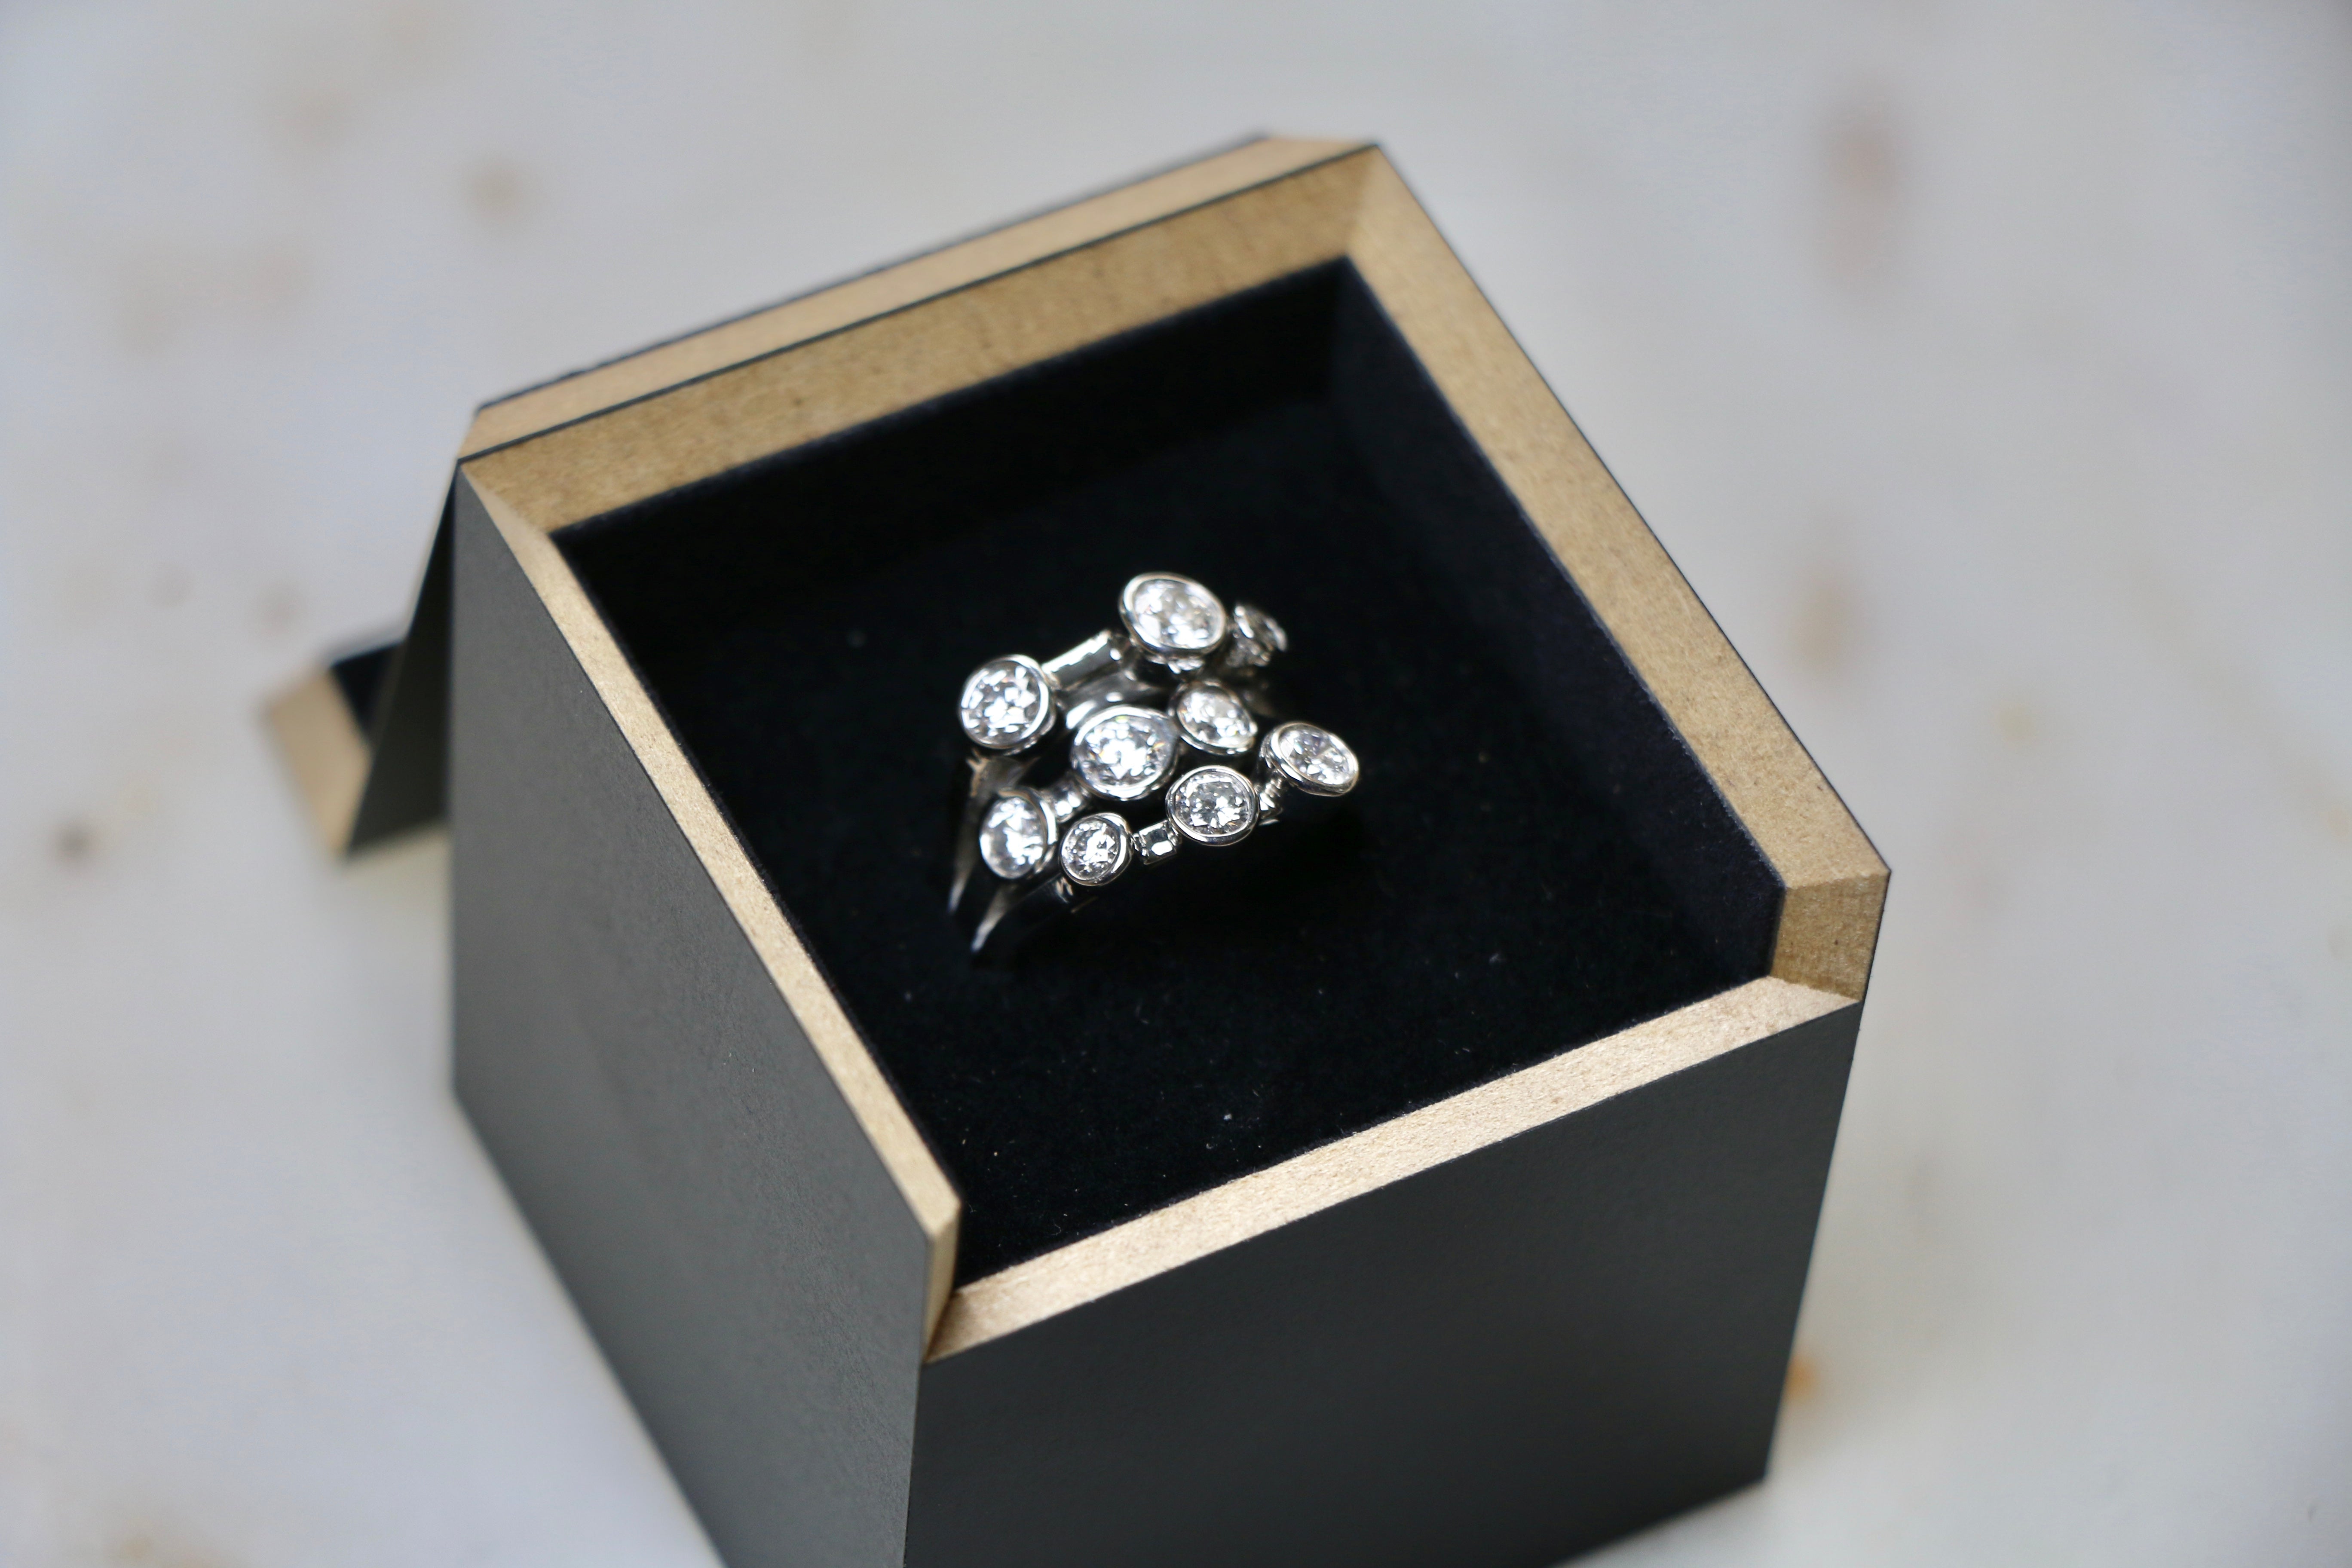 A multi-stone diamond cocktail ring in it's black presentation box